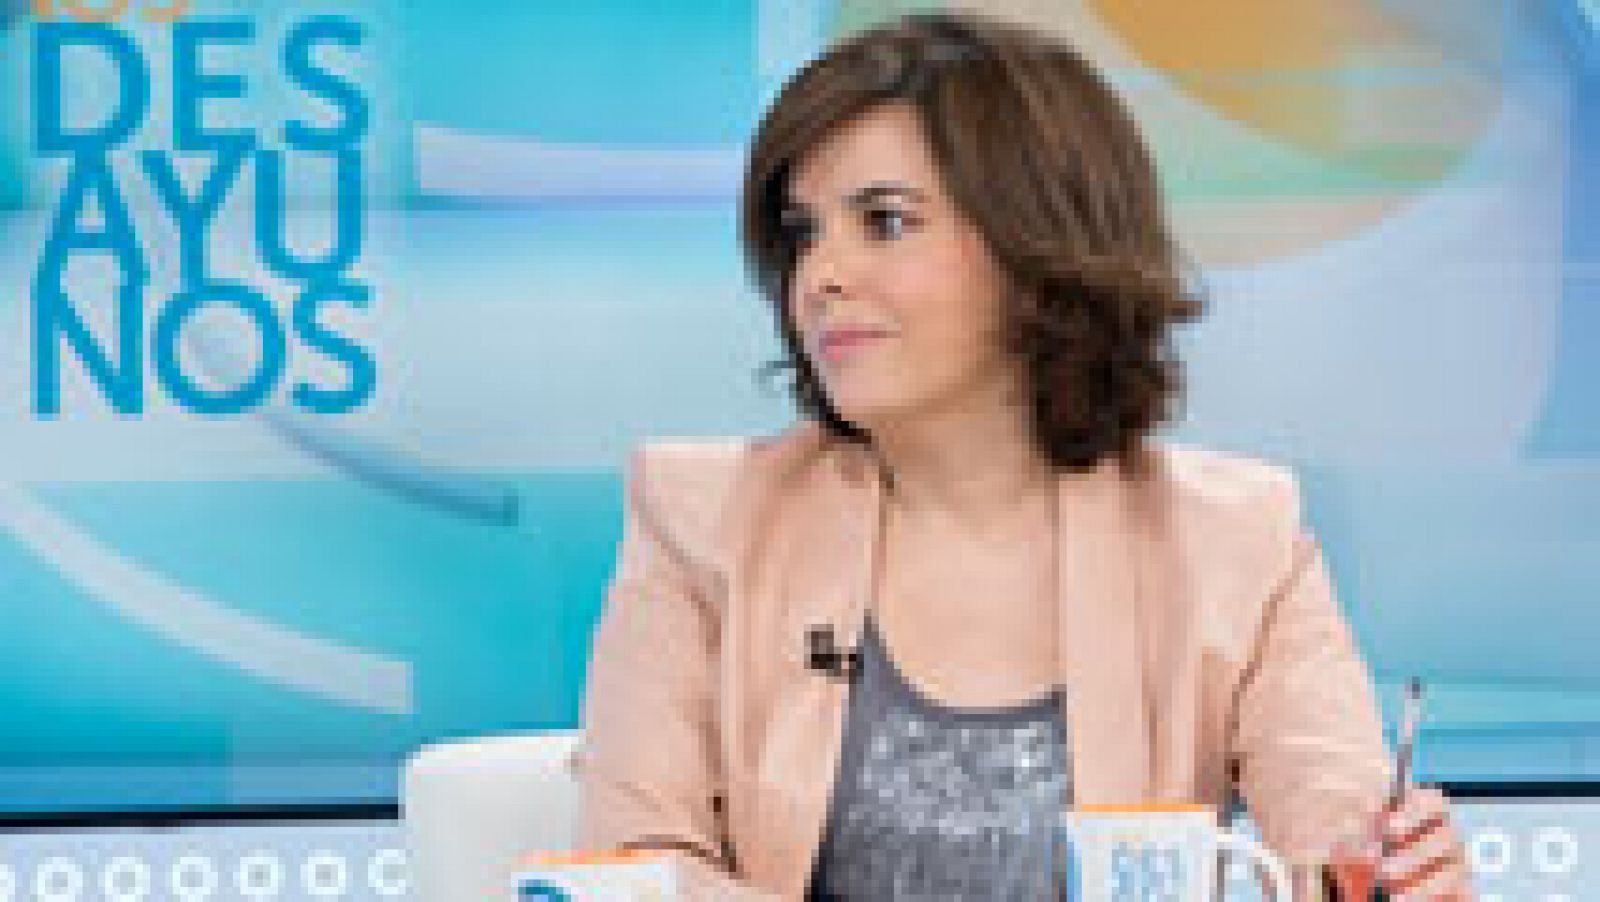 Telediario 1: Telediario 1 en 4' - 12/06/17 | RTVE Play